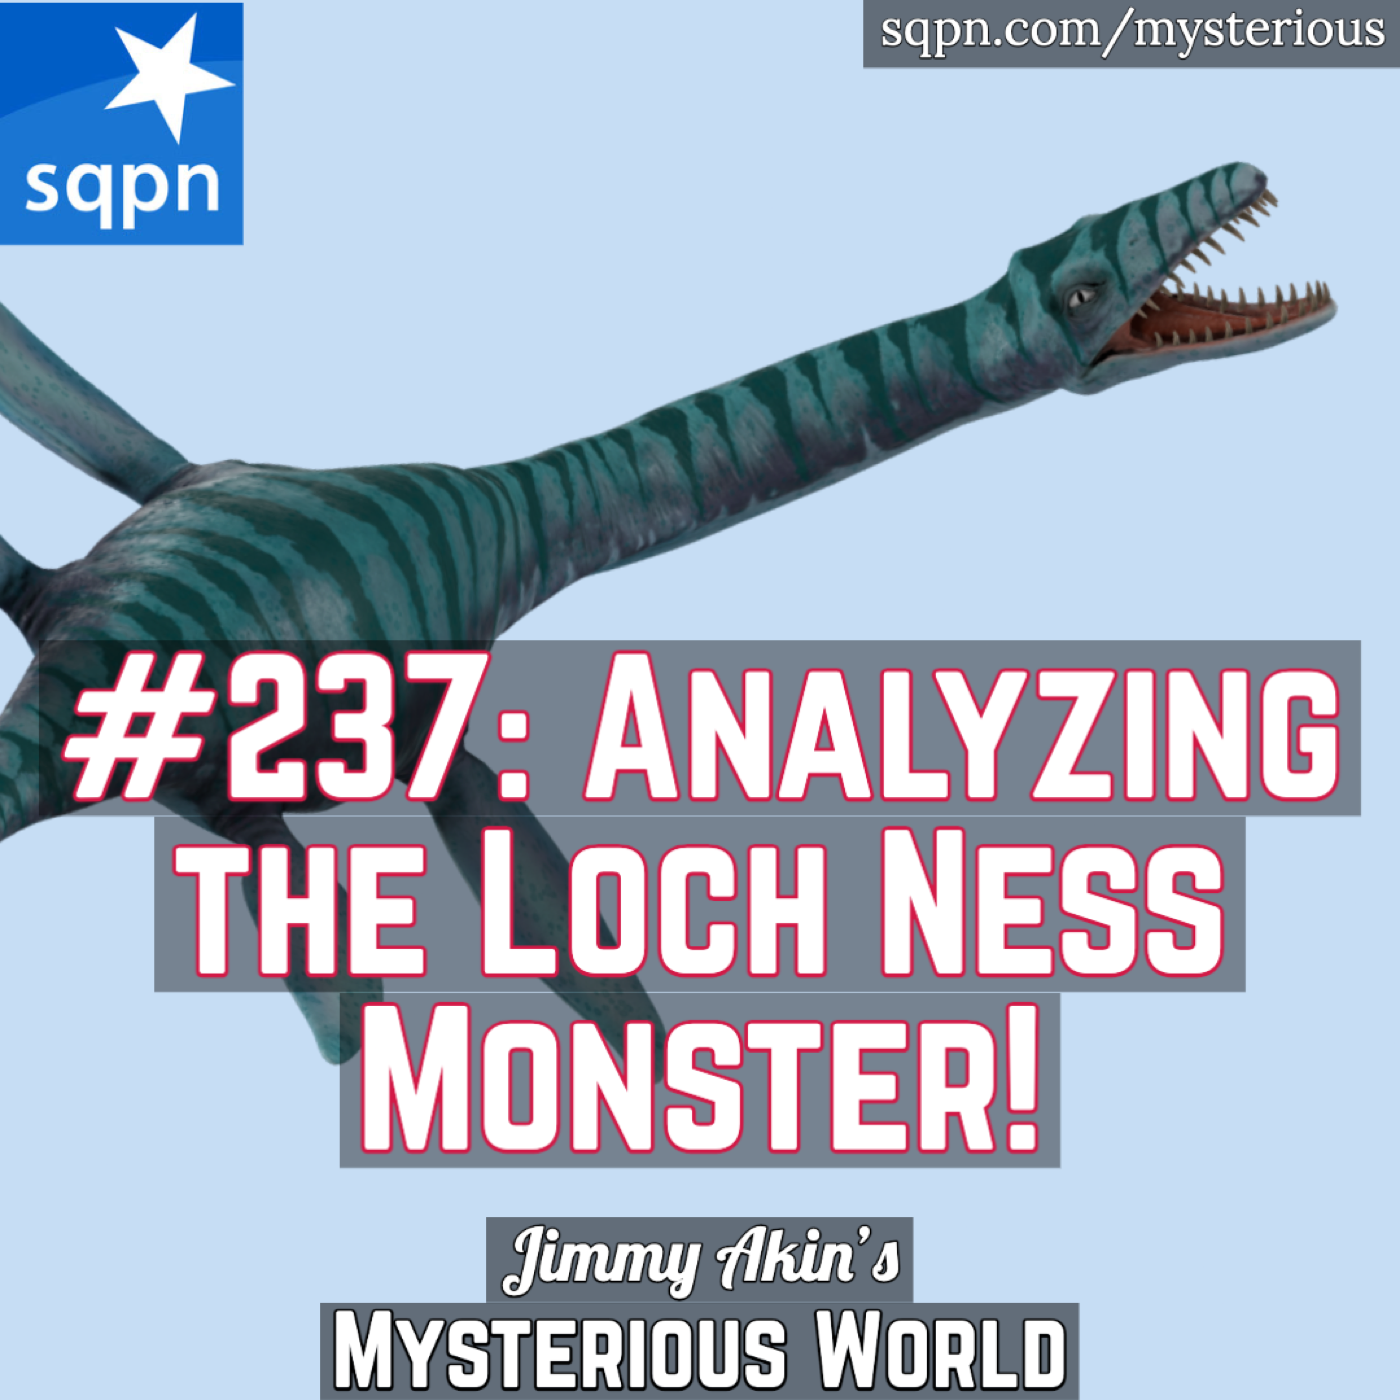 Analyzing the Loch Ness Monster